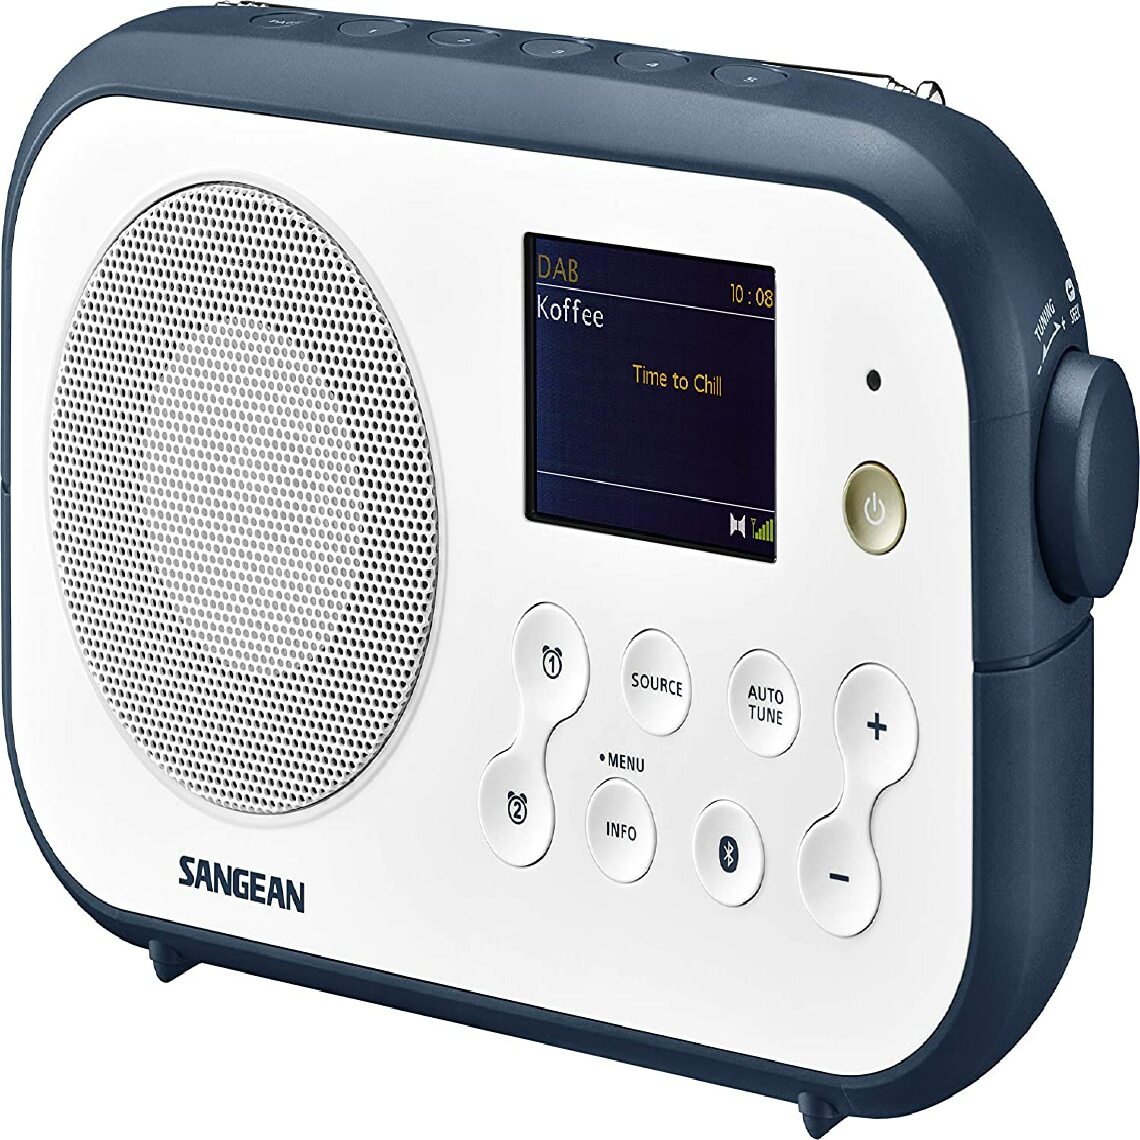 Sangean - radio portable bluetooth bleu blanc - Radio